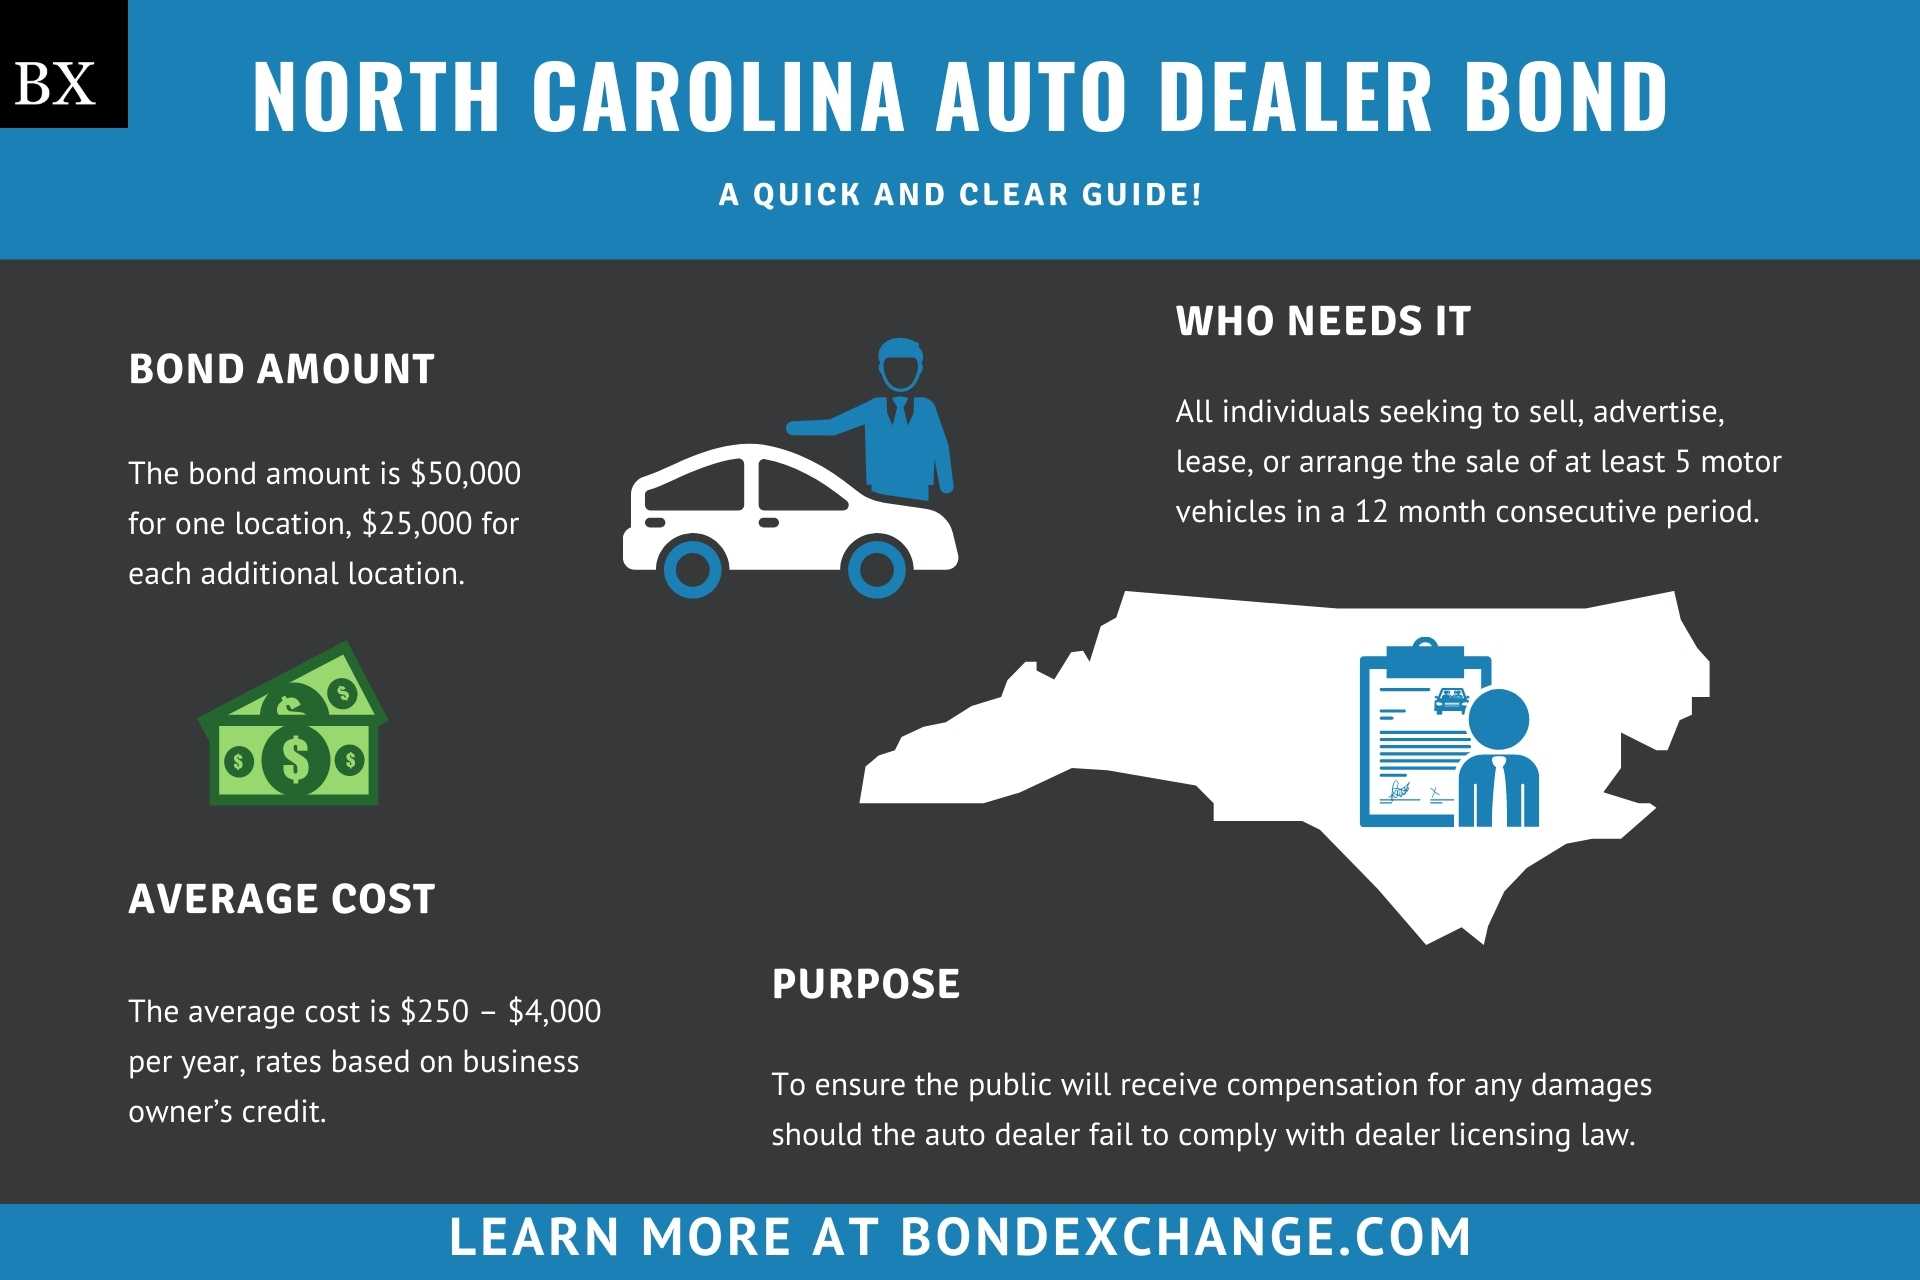 North Carolina Auto Dealer Bond A Guide for Insurance Agents